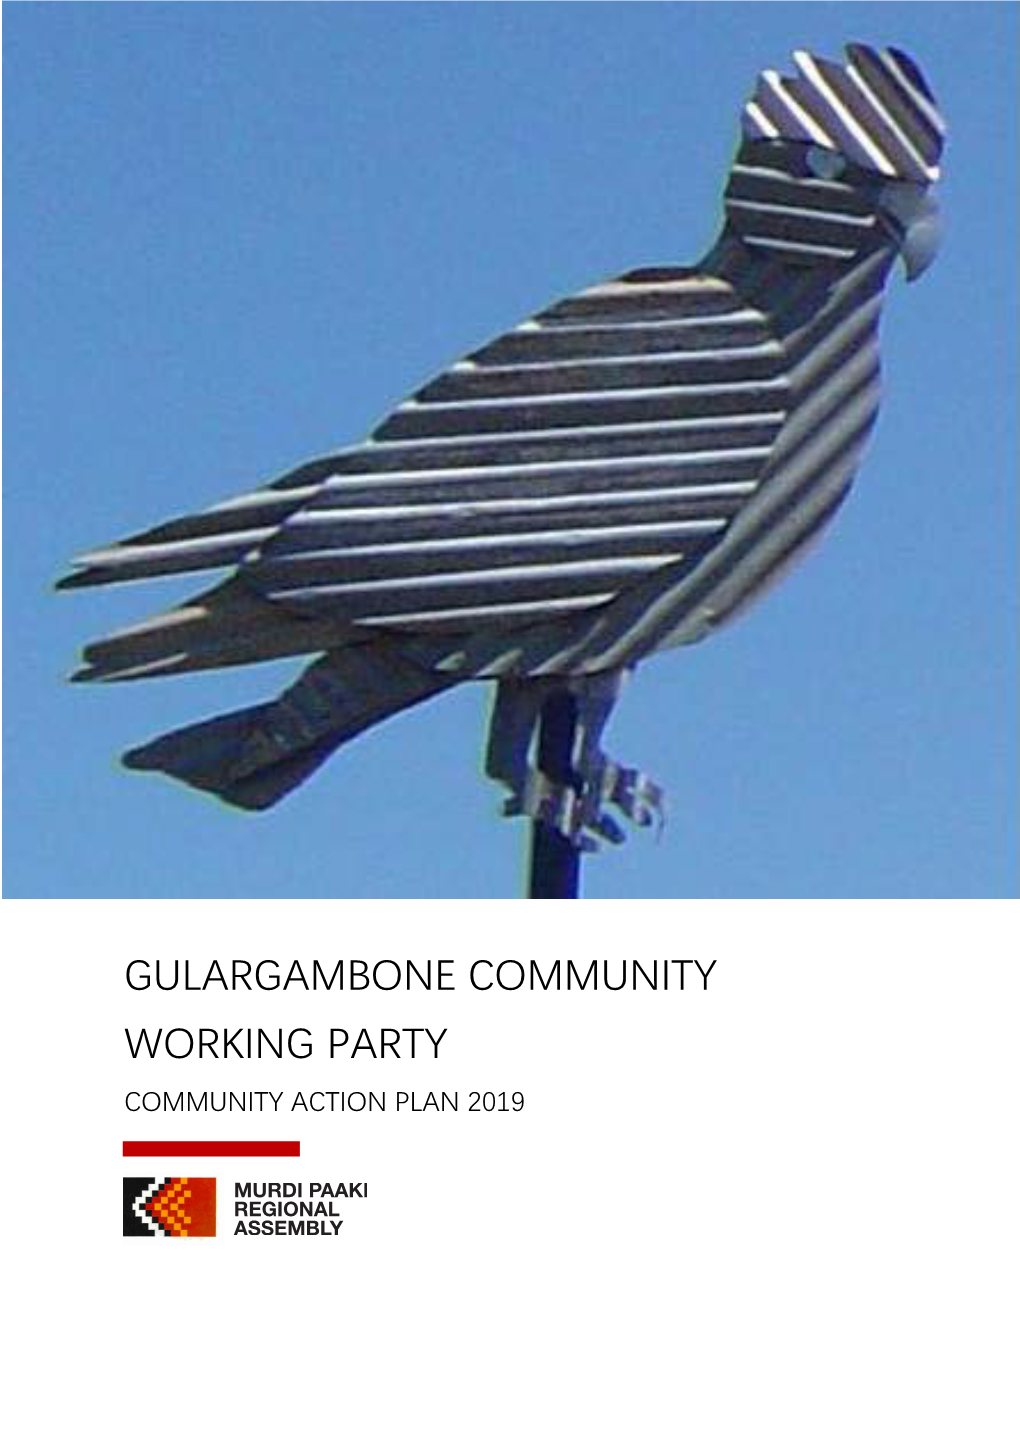 Gulargambone Community Working Party Community Action Plan 2019